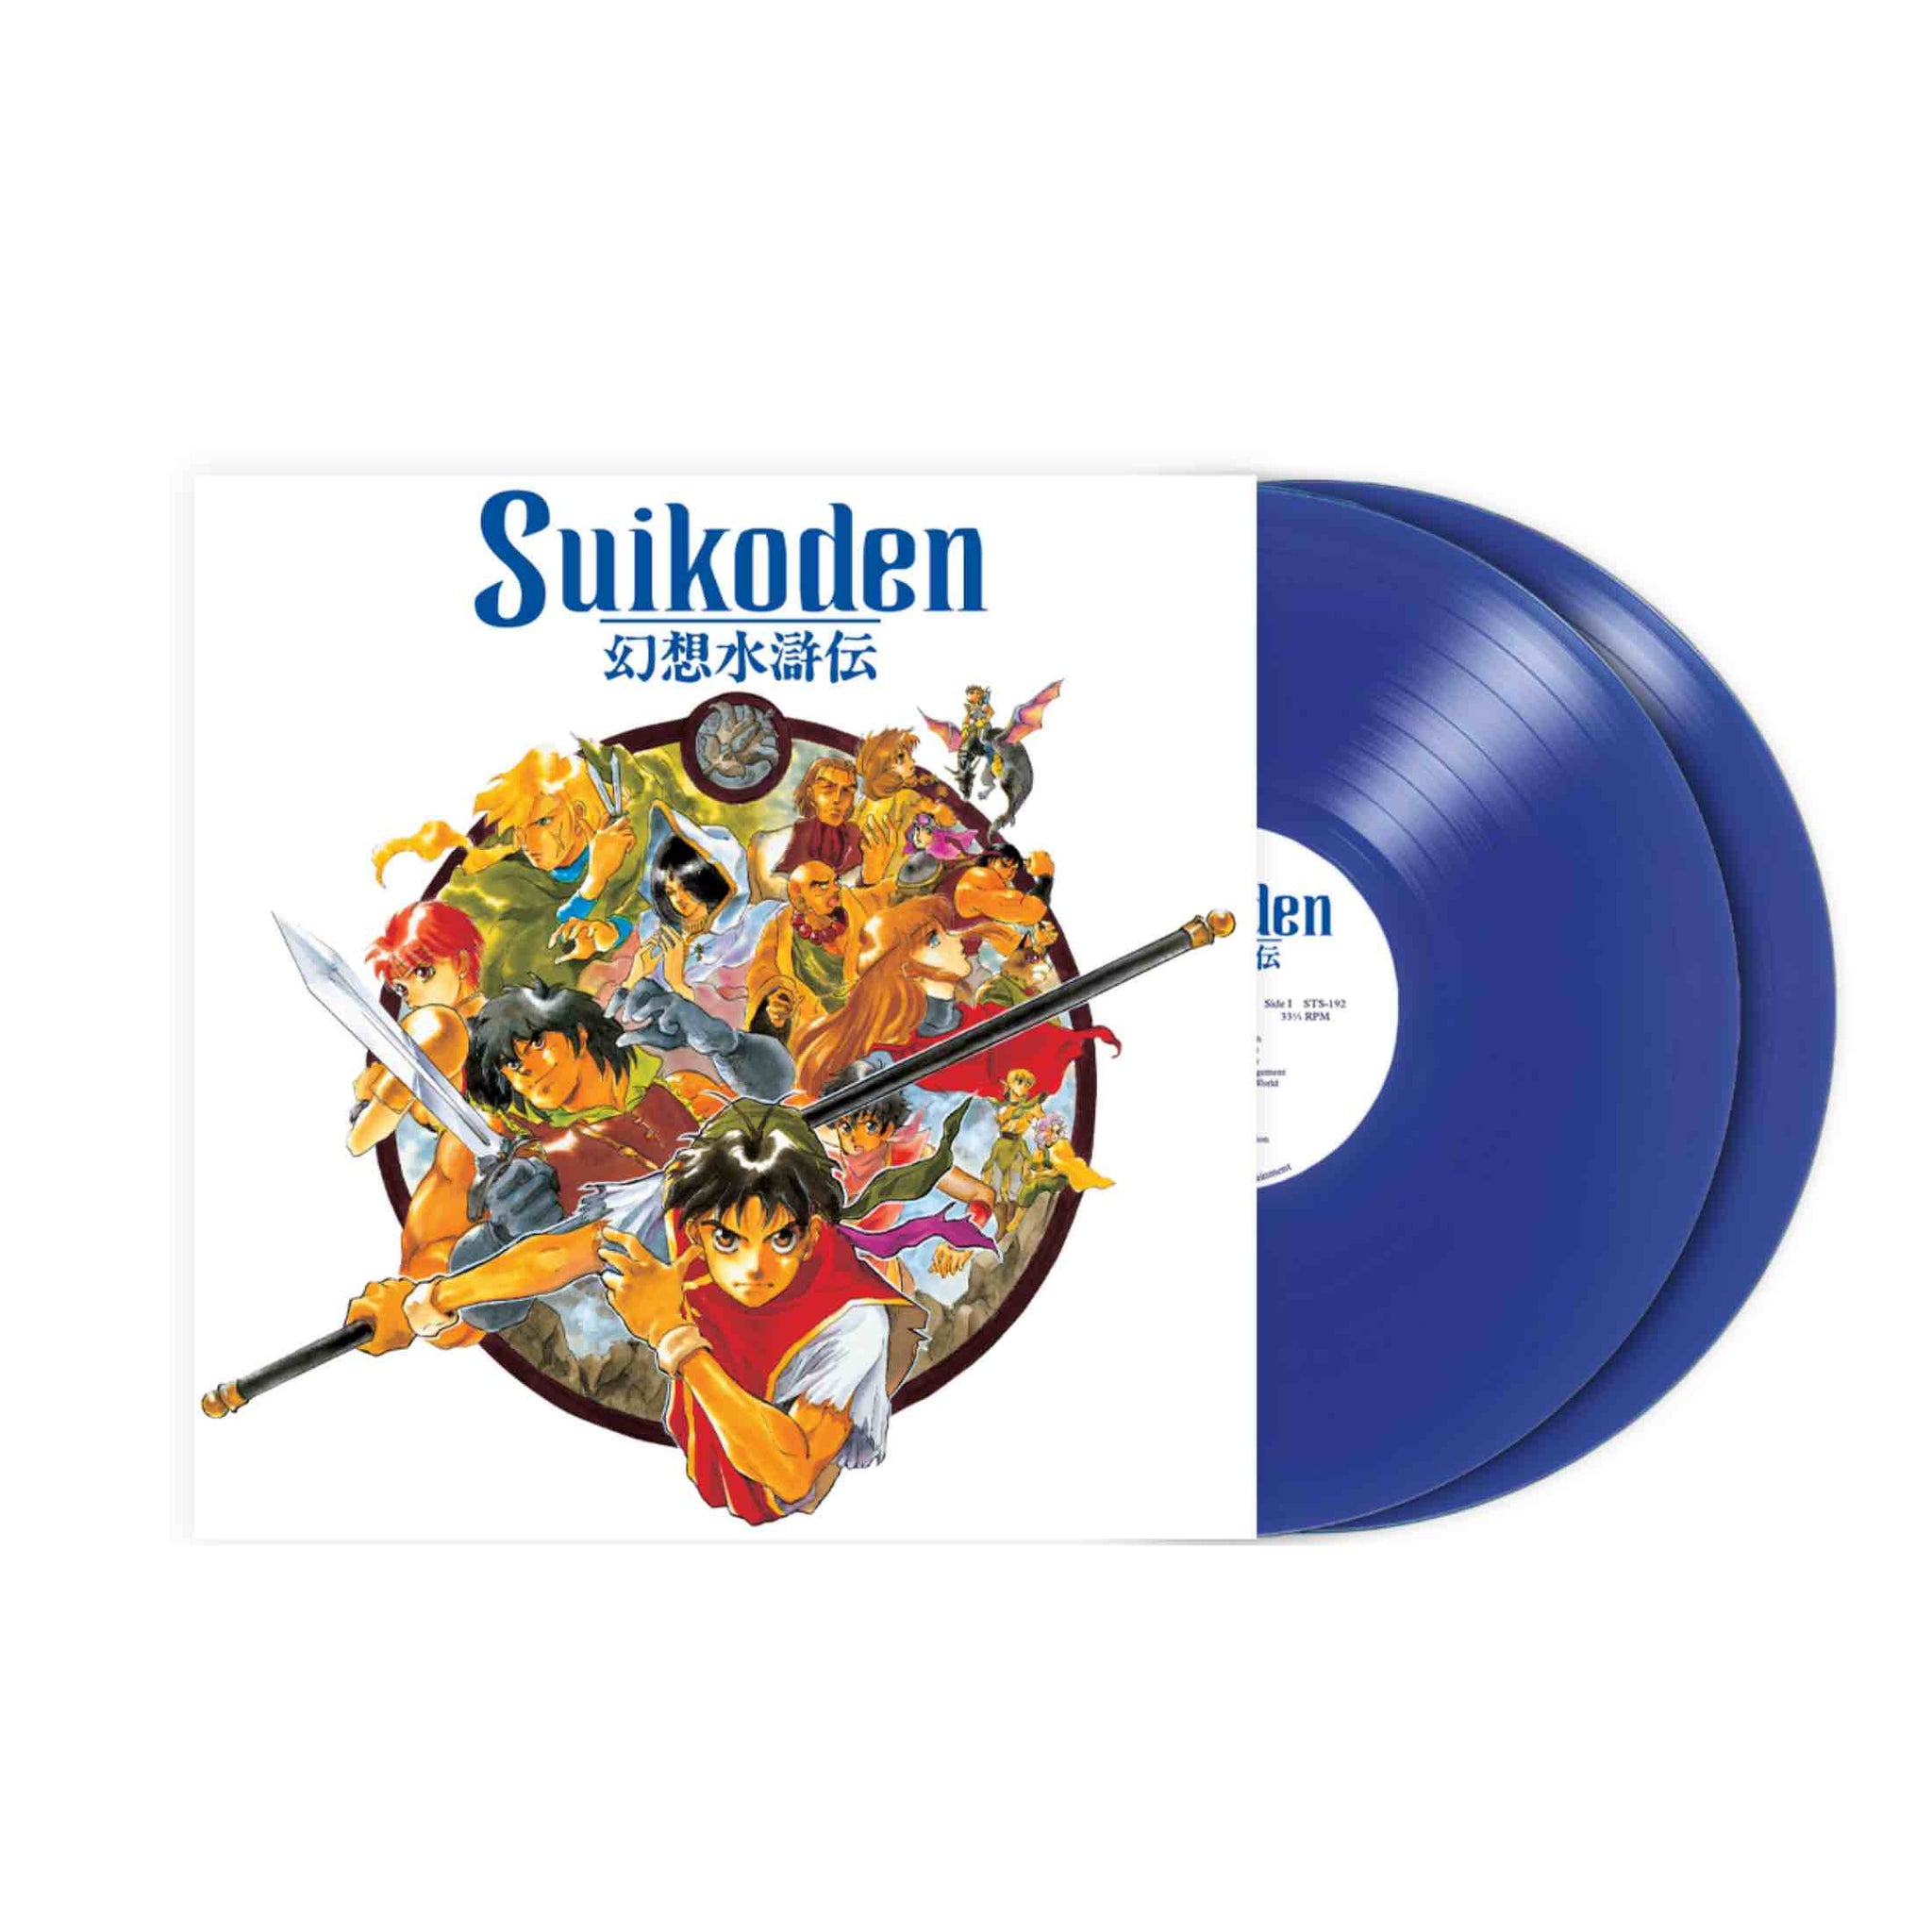 Konami Kukeiha Club - Suikoden (Original Video Game Soundtrack) 2xLP (Blue Vinyl)